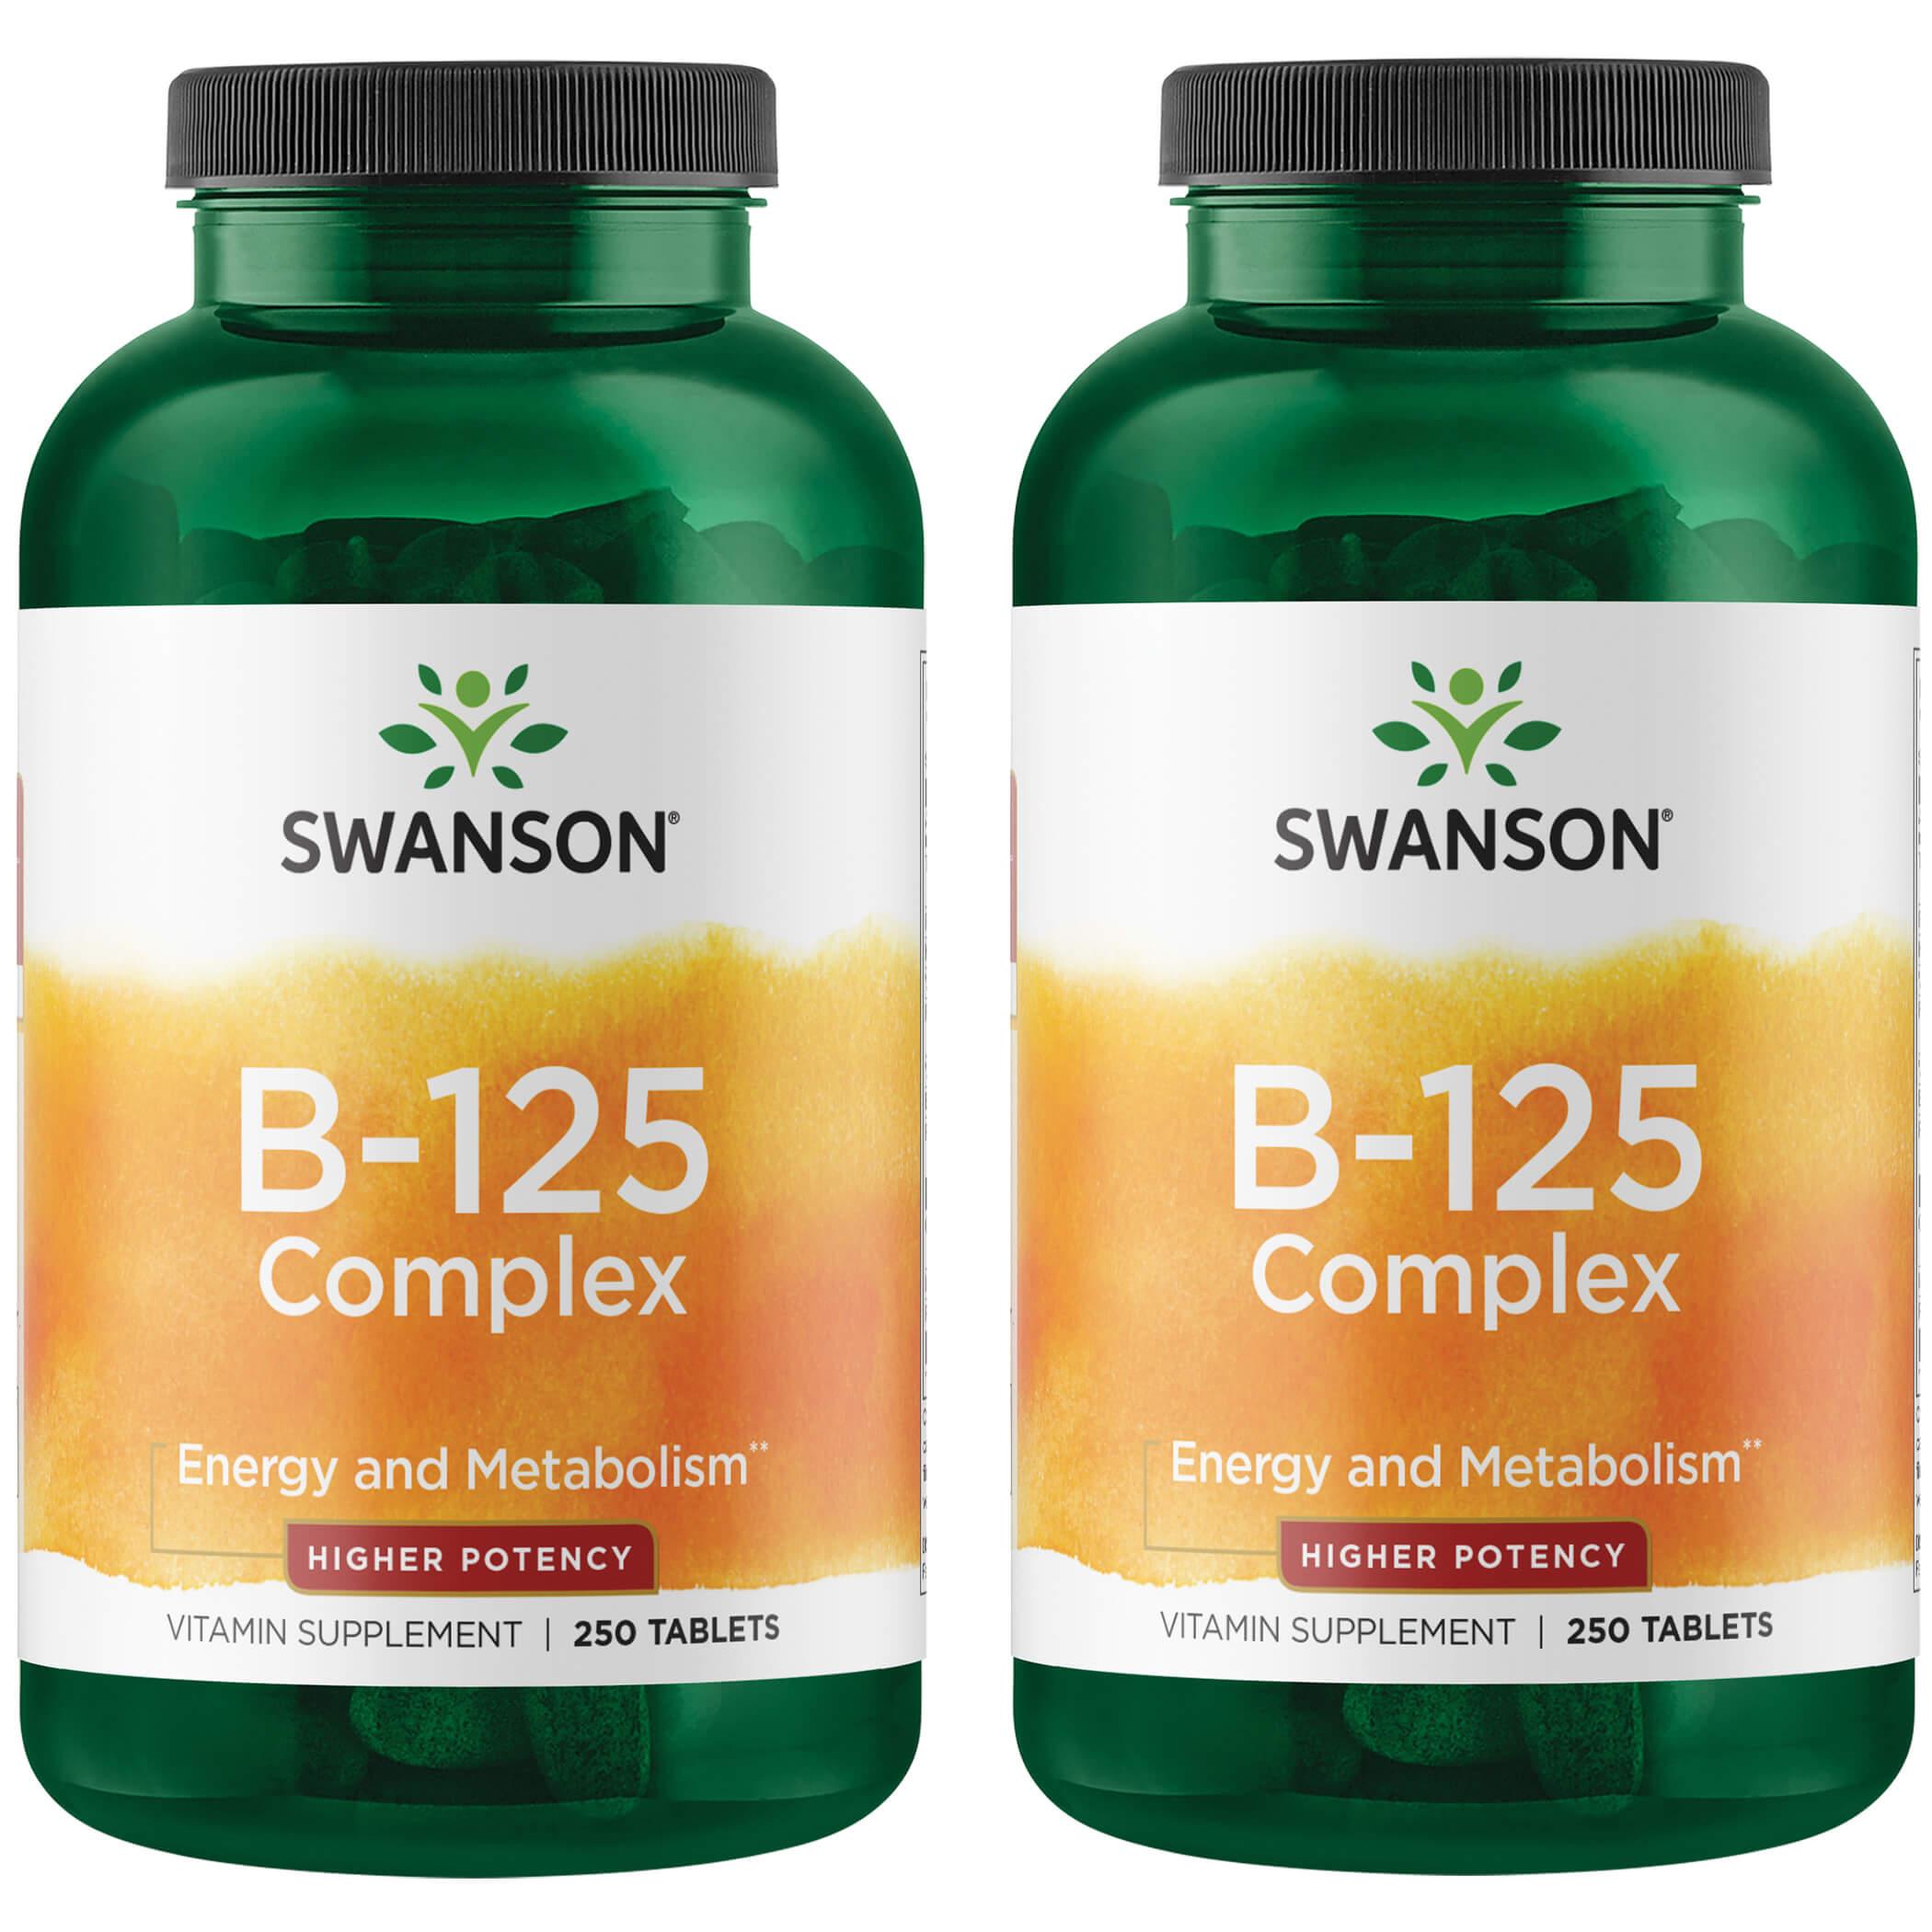 Swanson Premium Vitamin B-125 Complex - Higher Potency 2 Pack 250 Tabs Vitamin C